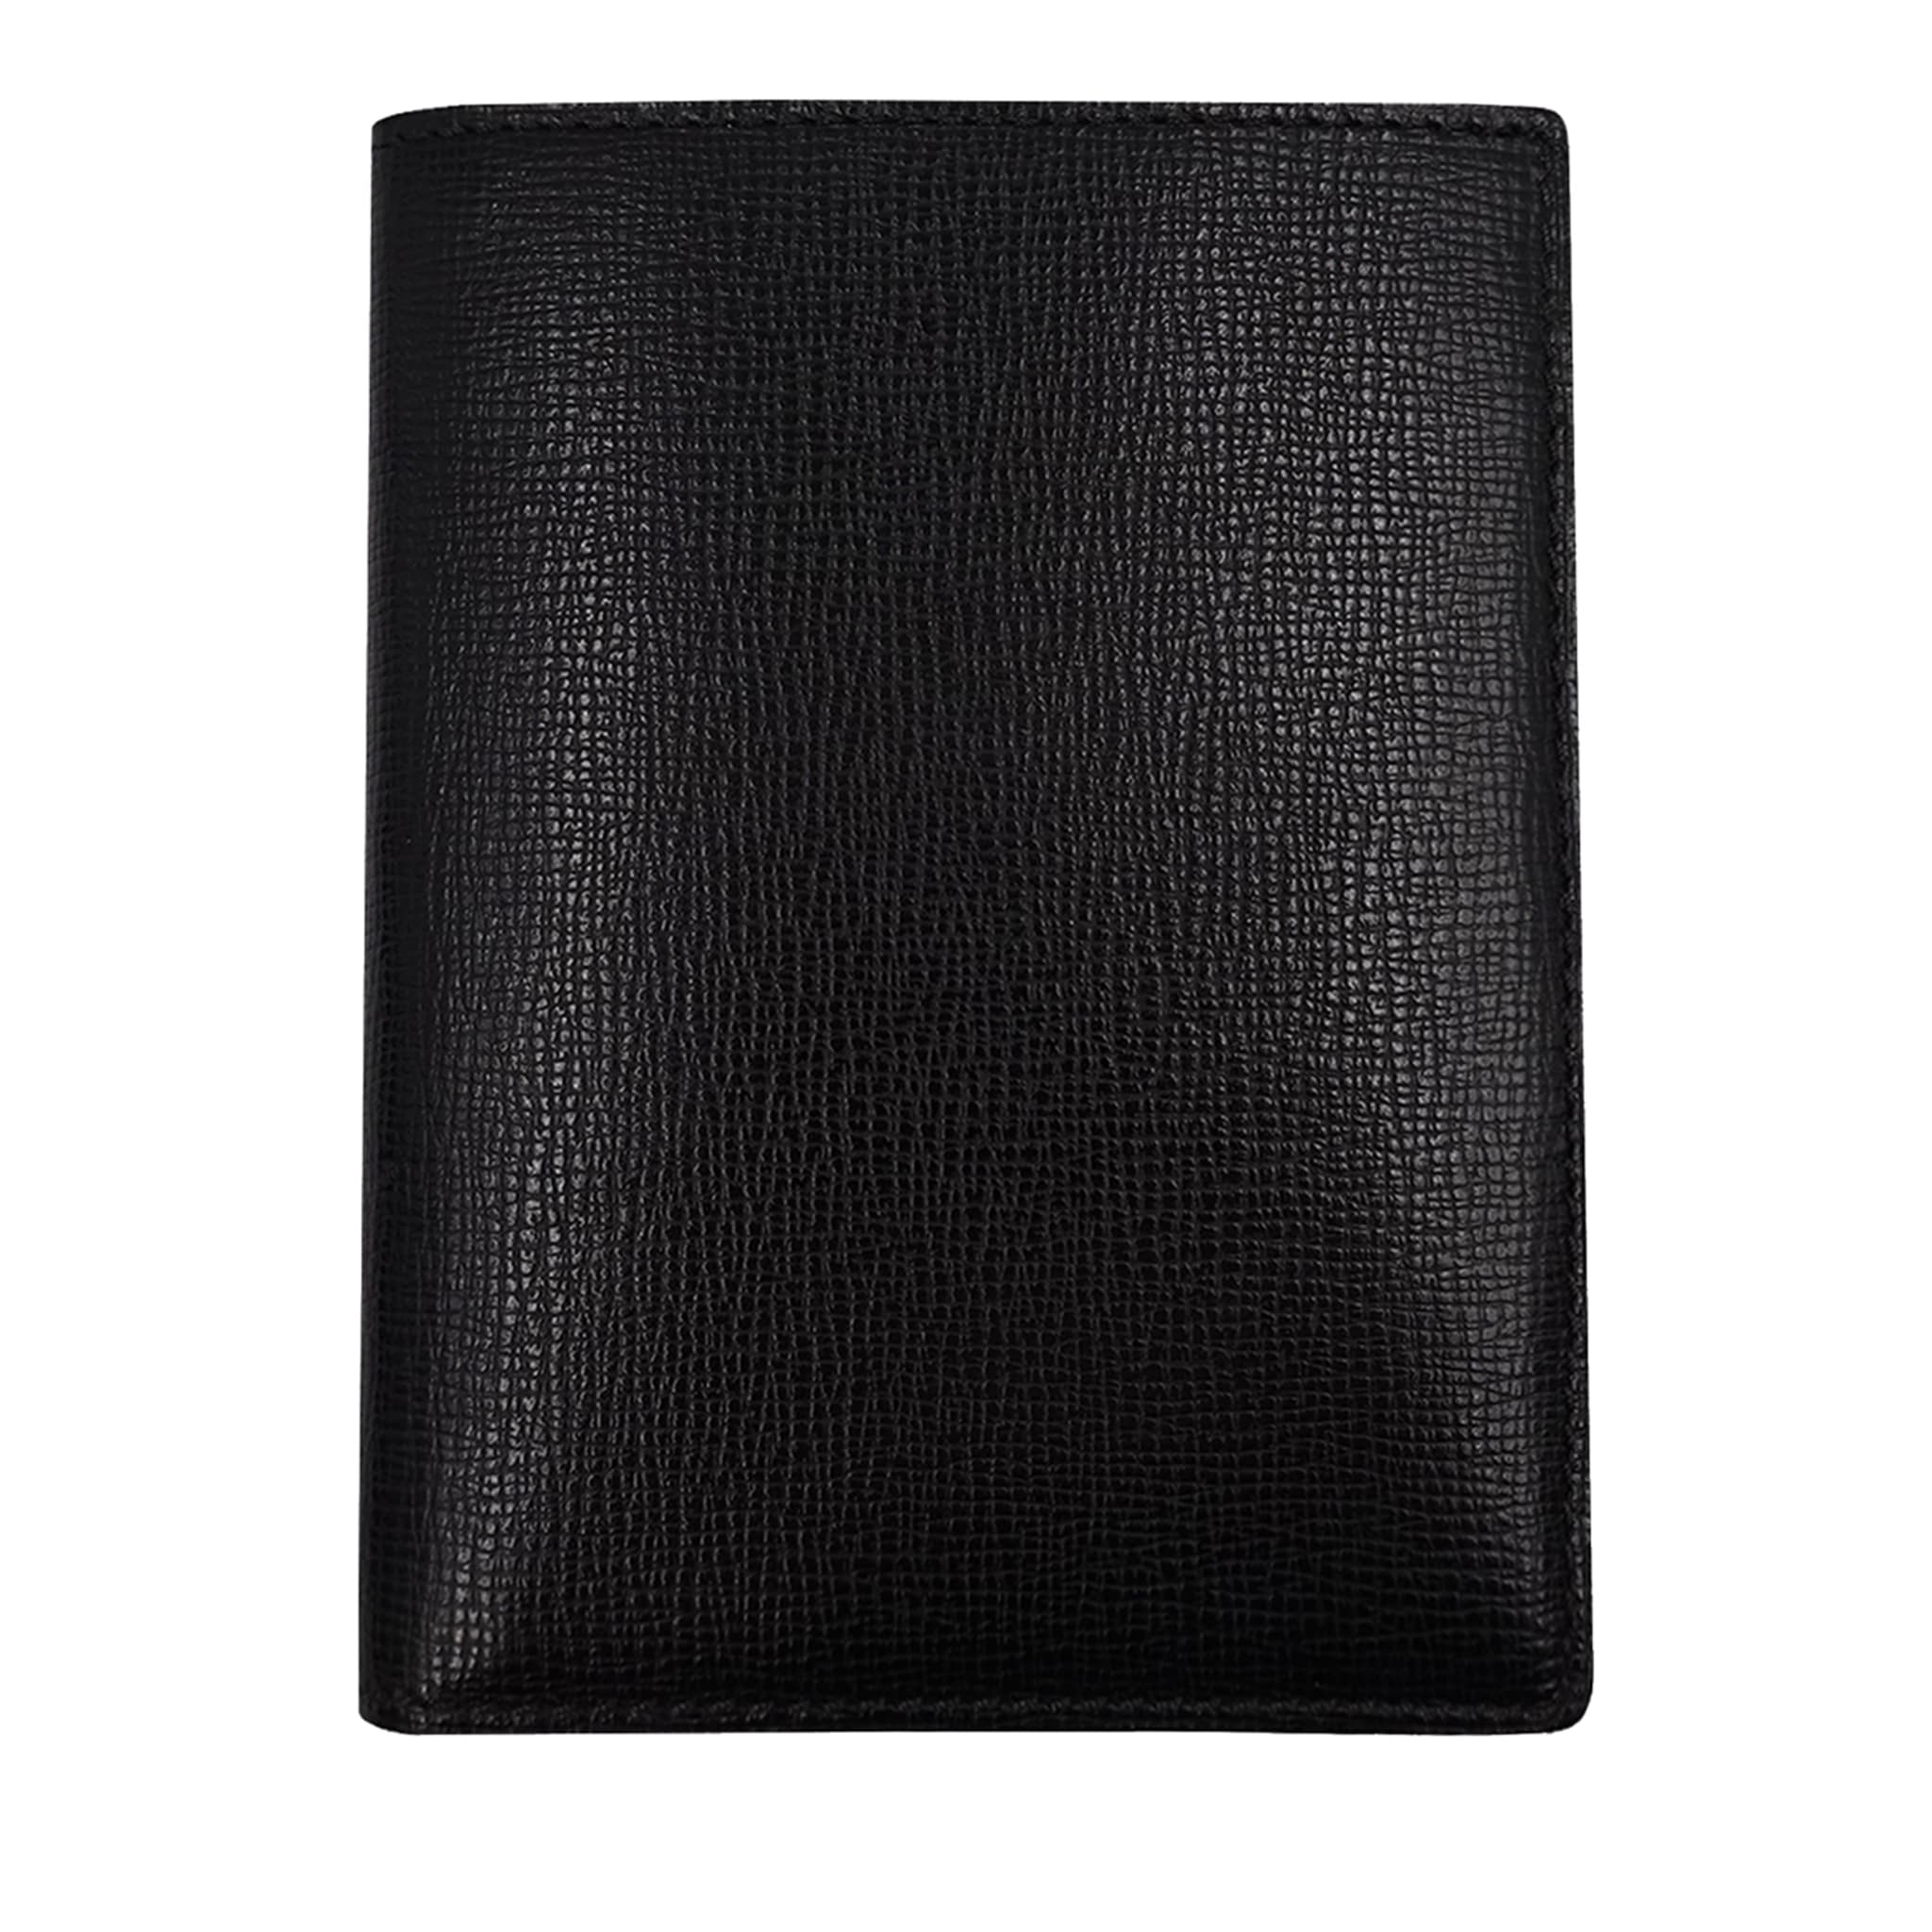 Blazer Black Wallet with Document Pocket - Main view